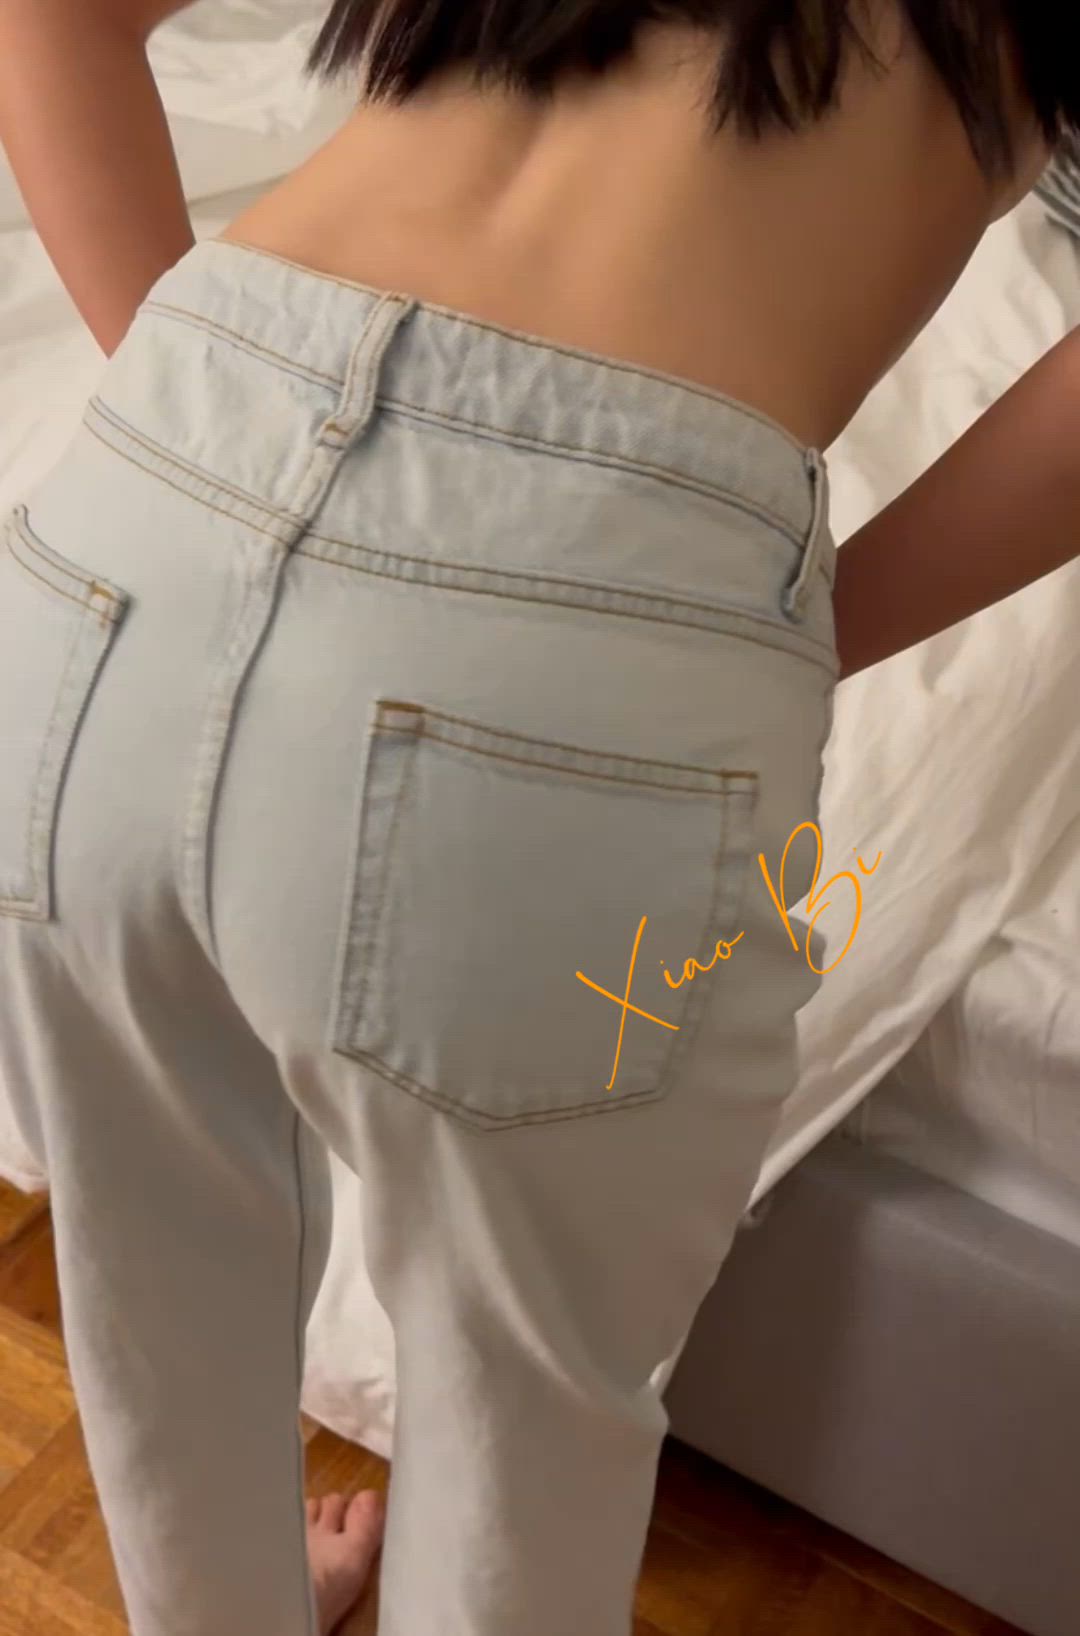 Ass porn video with onlyfans model Xiao Bi <strong>@xiao_bi_vip</strong>